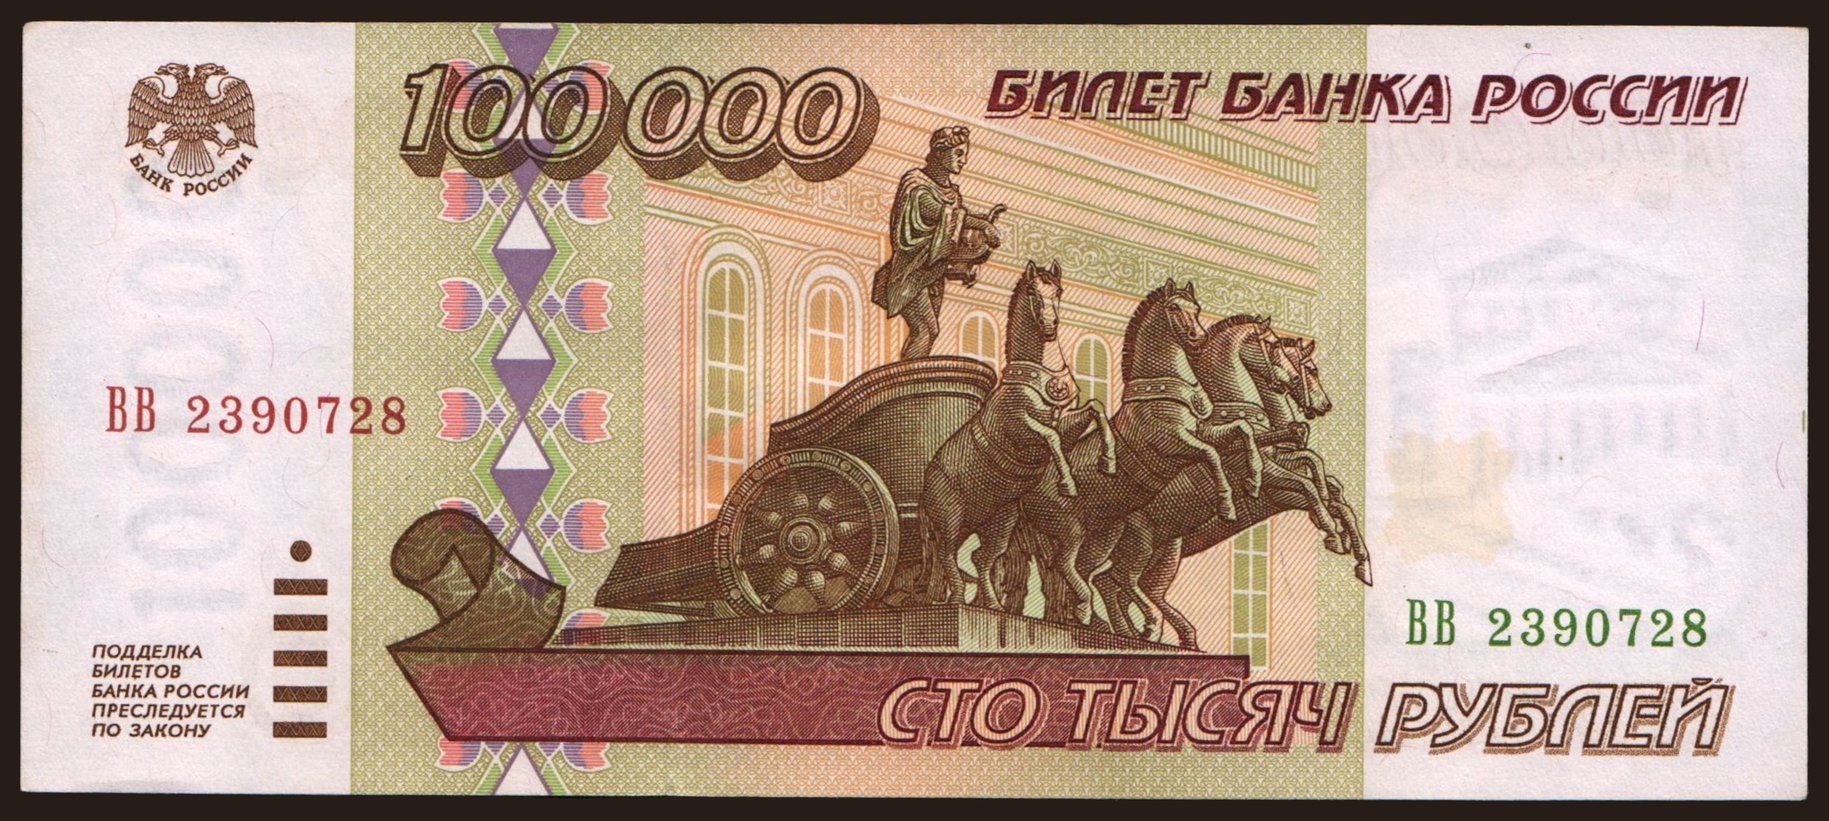 100.000 rubel, 1995